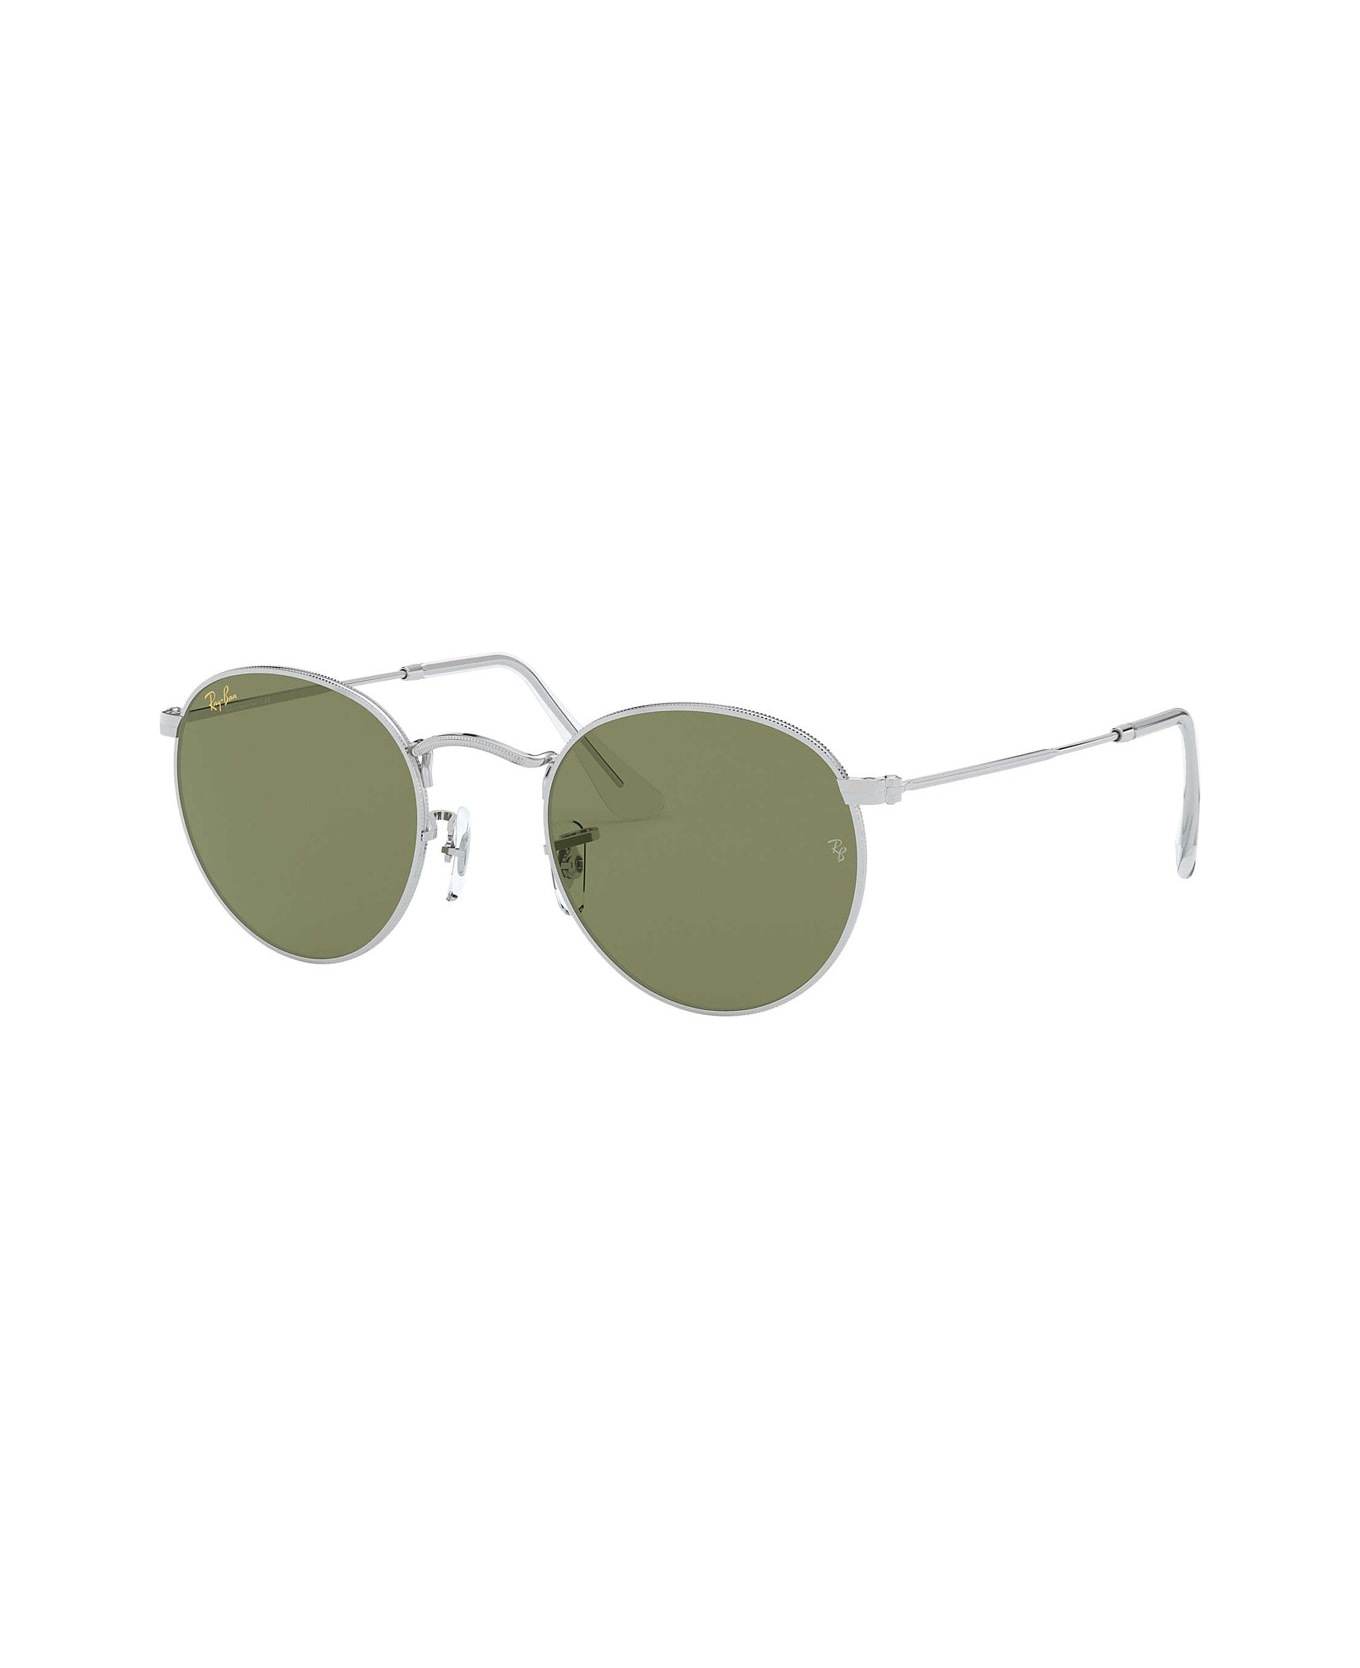 Ray-Ban Round Metal Rb3447 Polarizzato Sunglasses - Argento サングラス